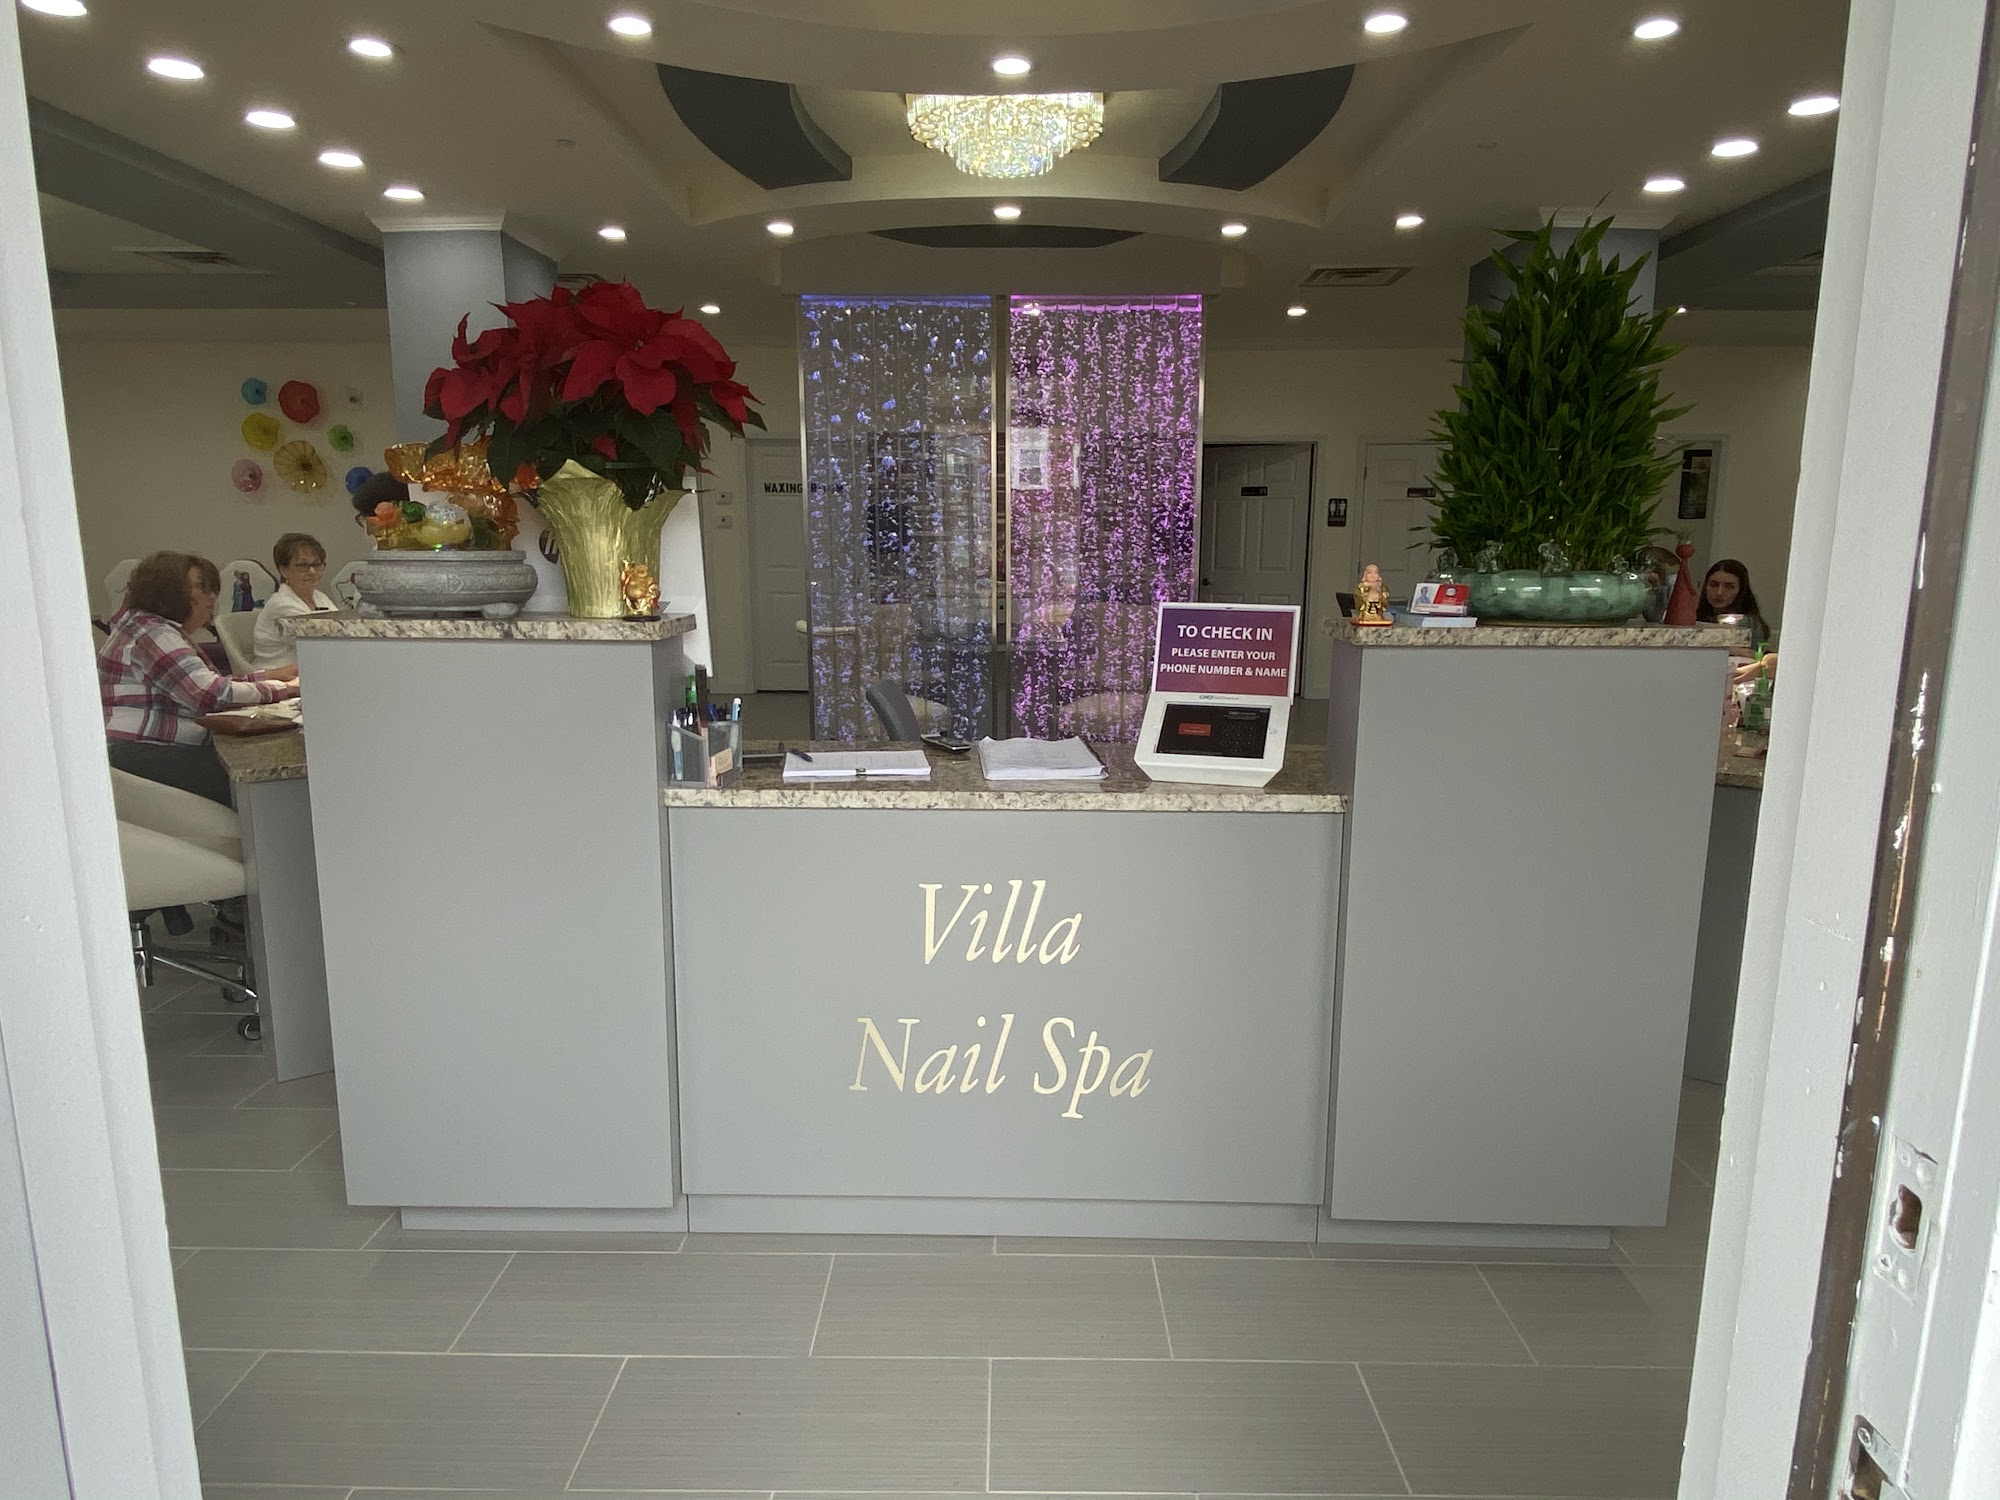 Villa Nails Spa